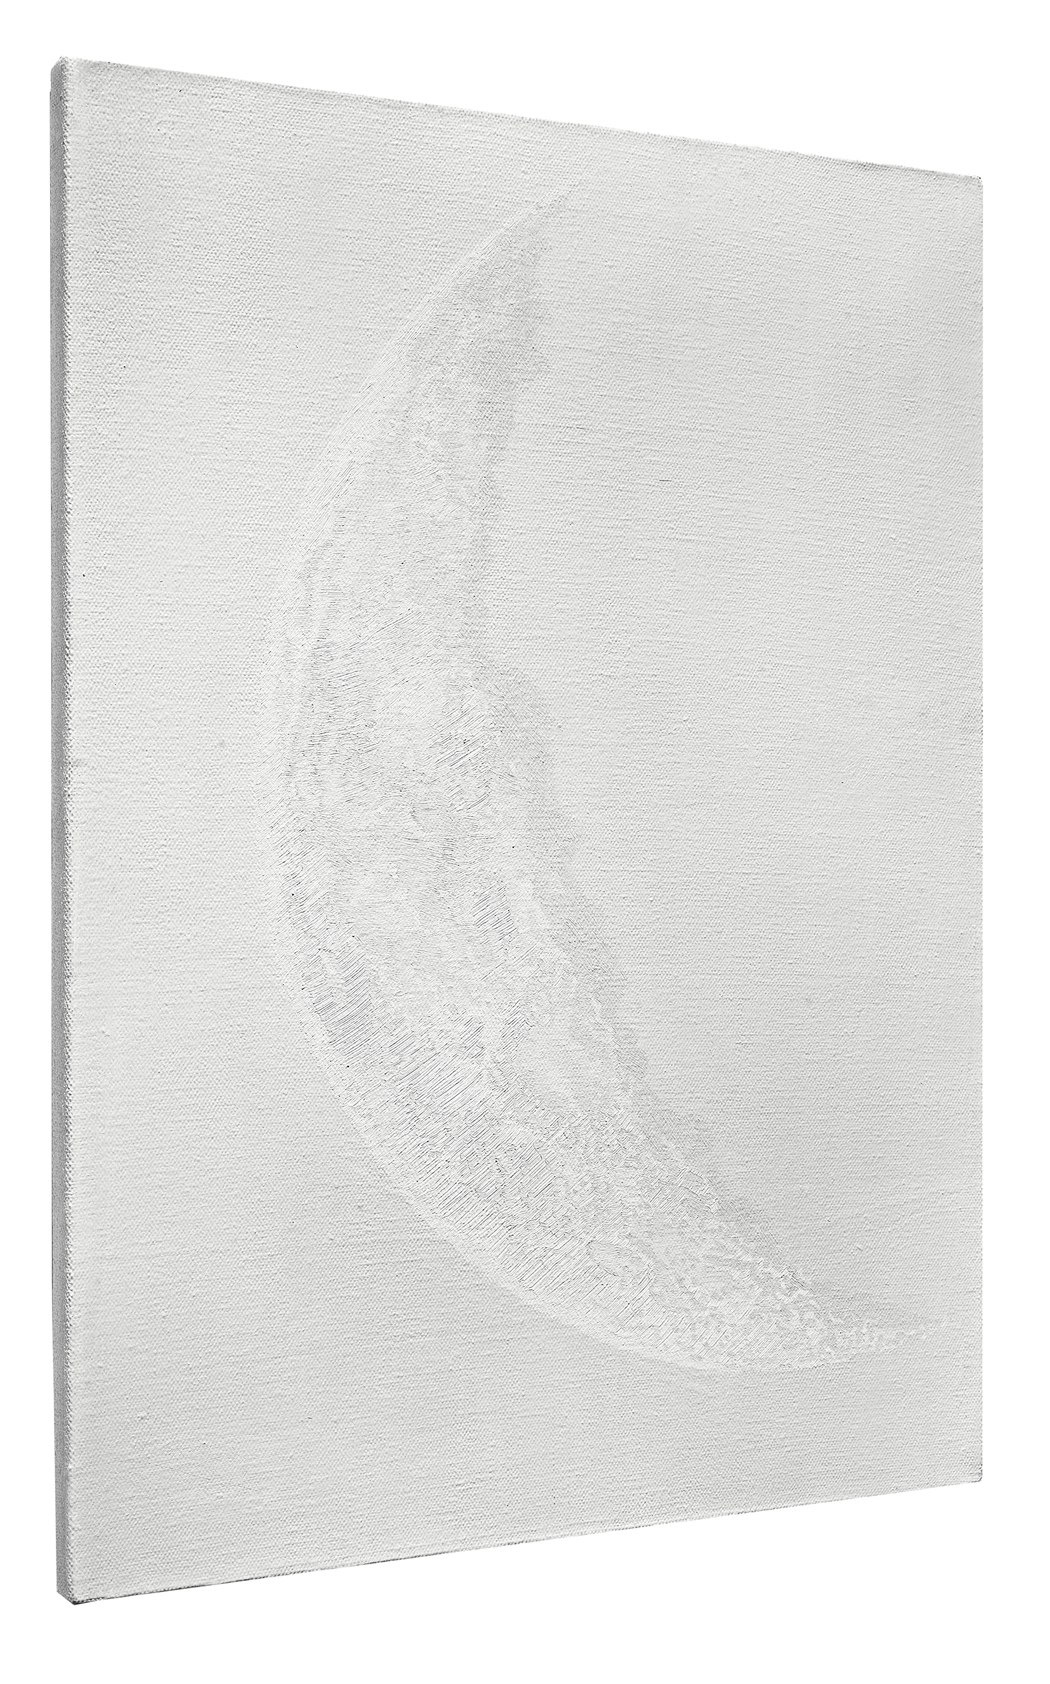 Shi Jing 史晶 (b. 1971), Crescent Moon 月牙, 2012